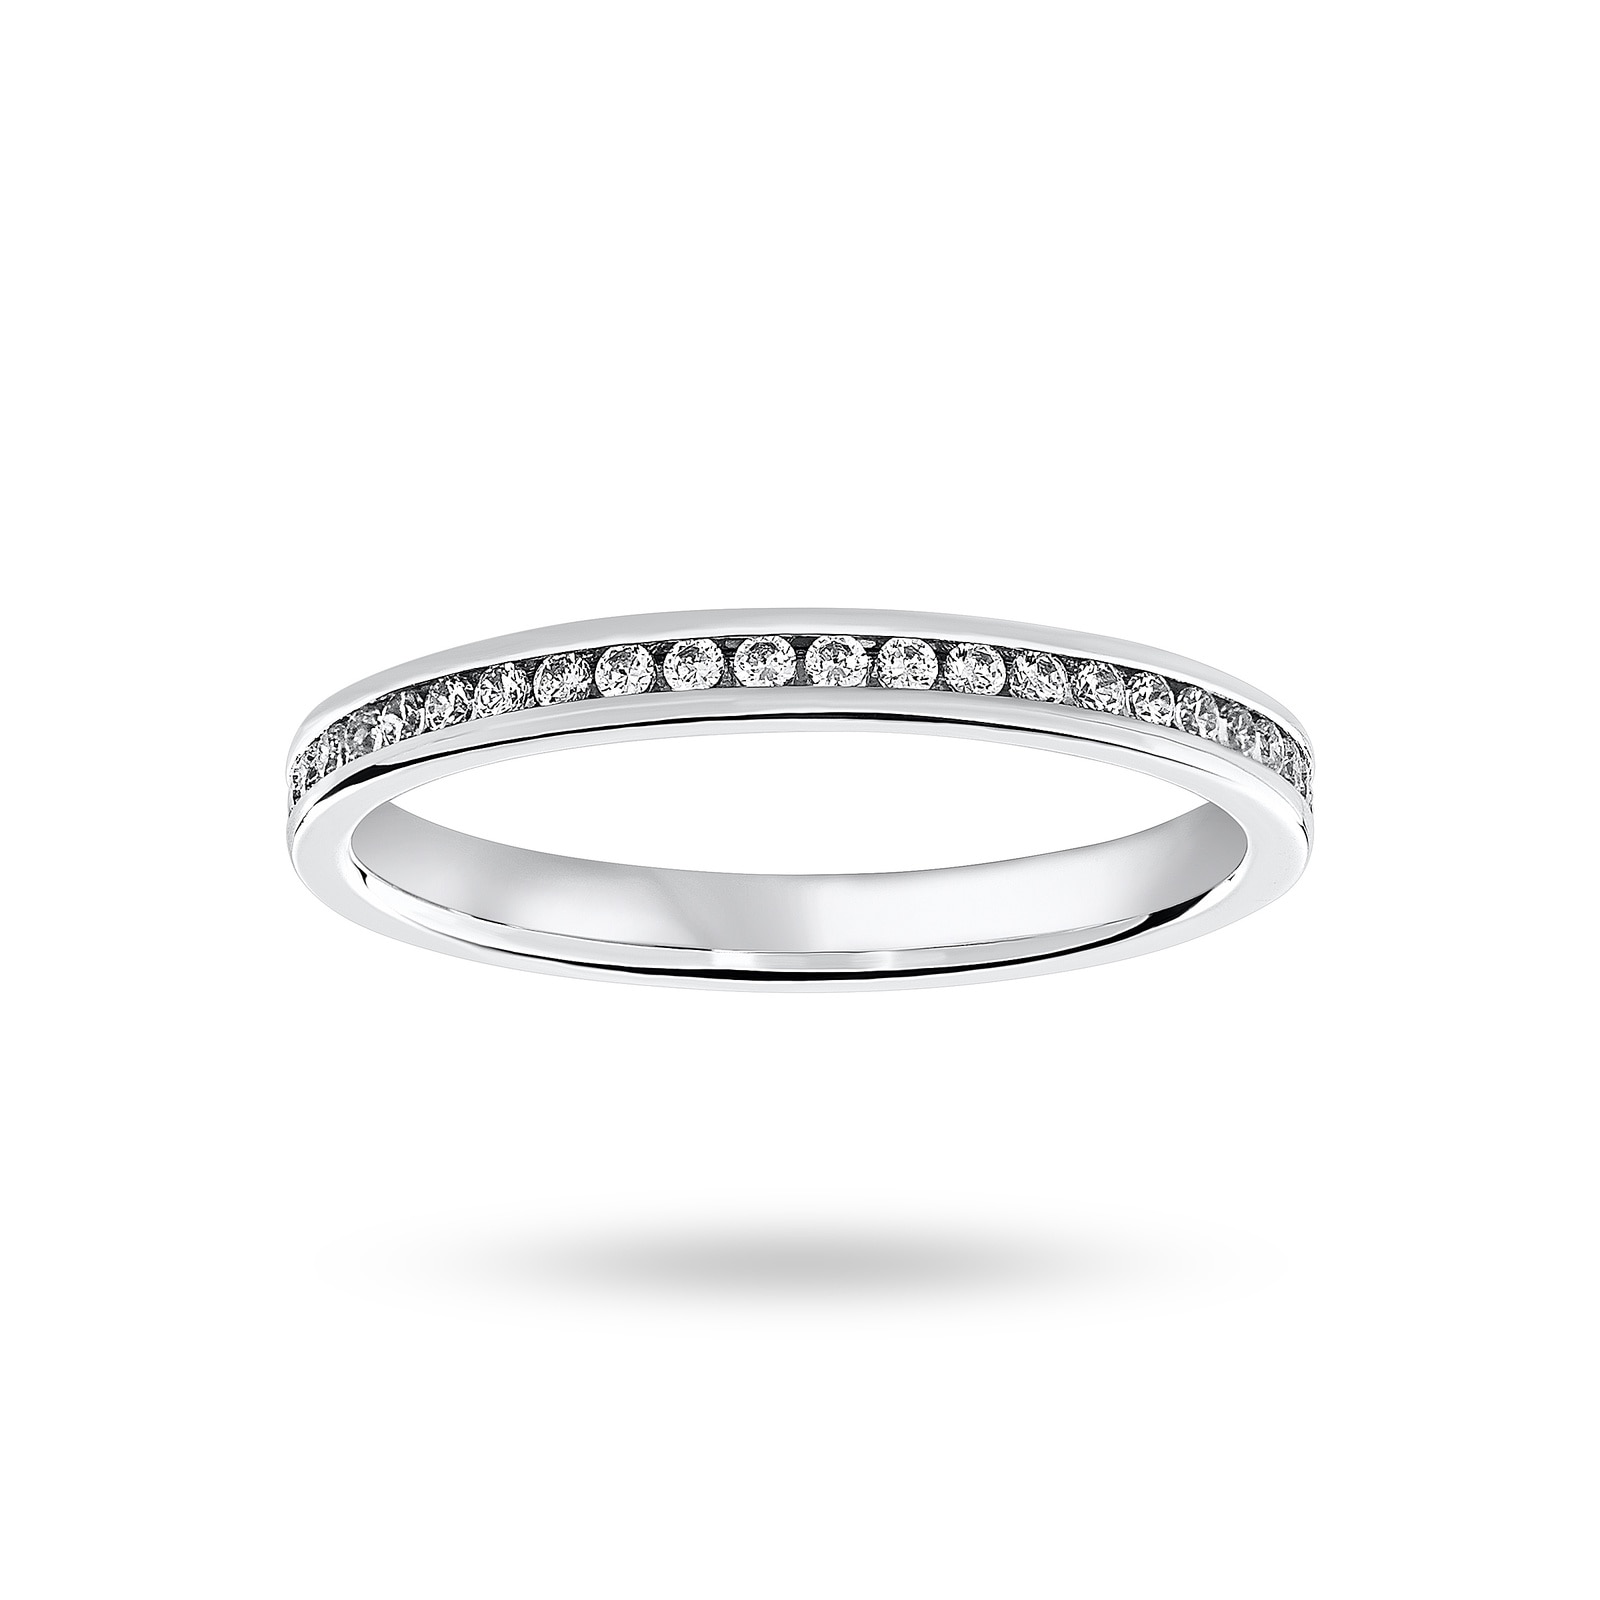 18 Carat White Gold 0.33 Carat Brilliant Cut Channel Set Full Eternity Ring - Ring Size M